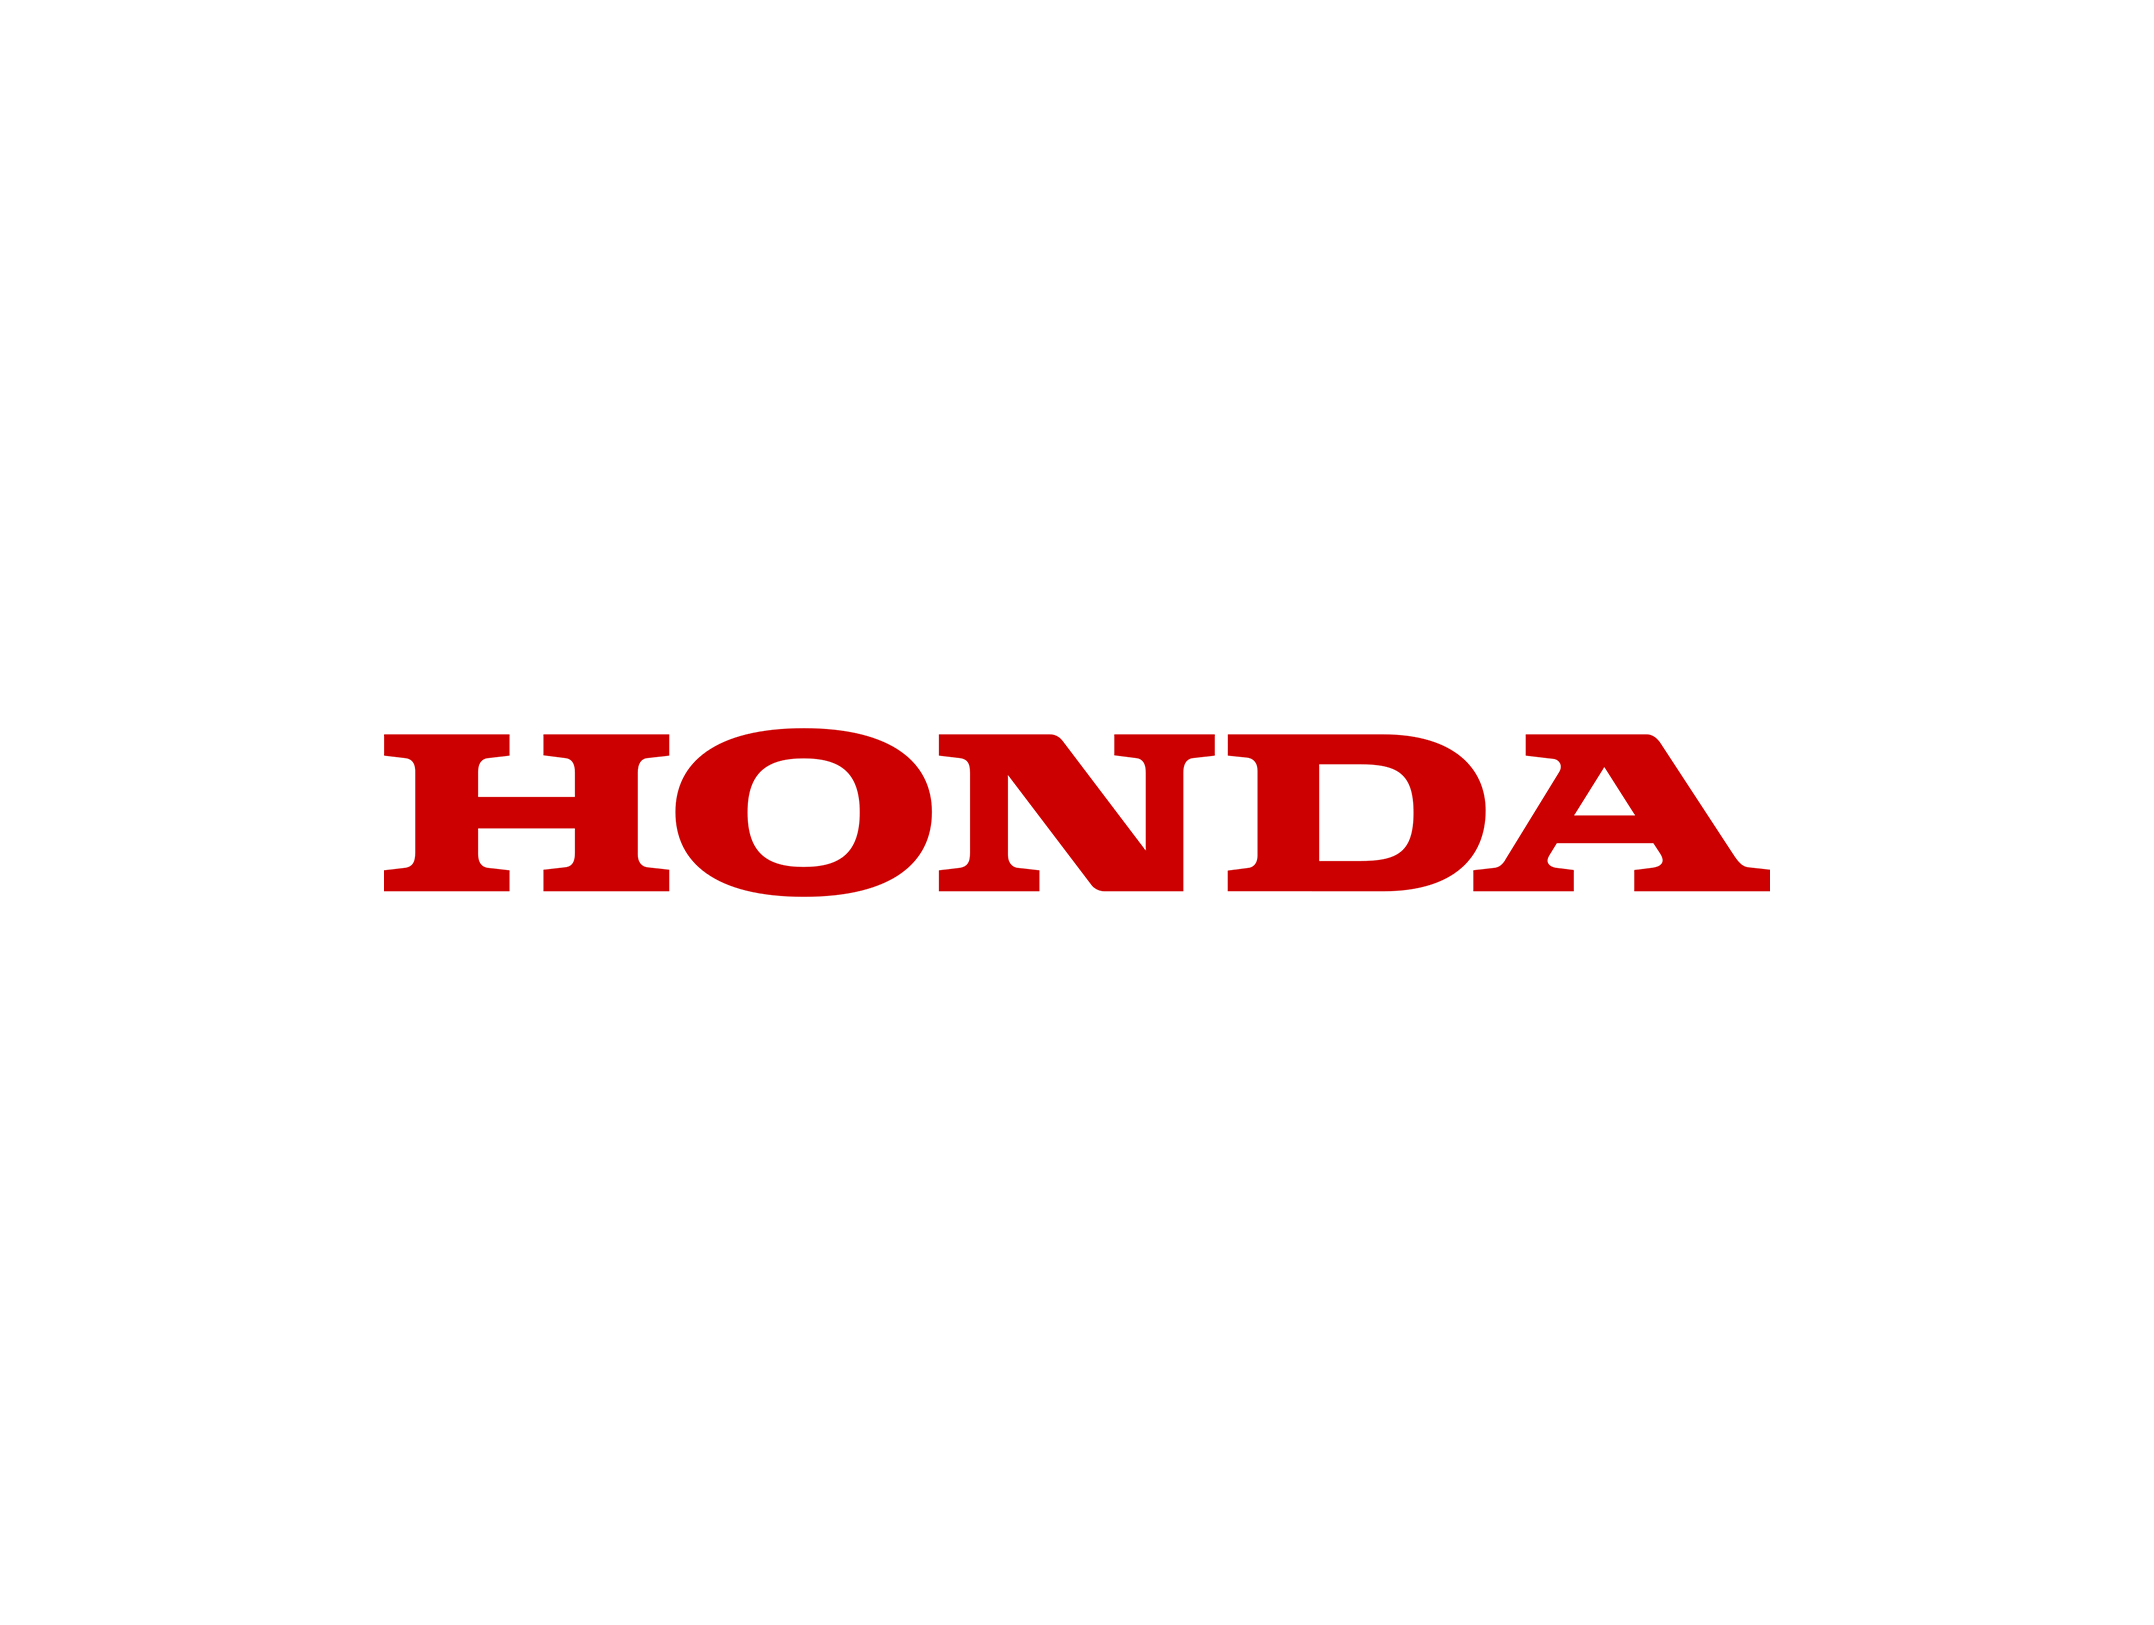 Logotipo de Honda